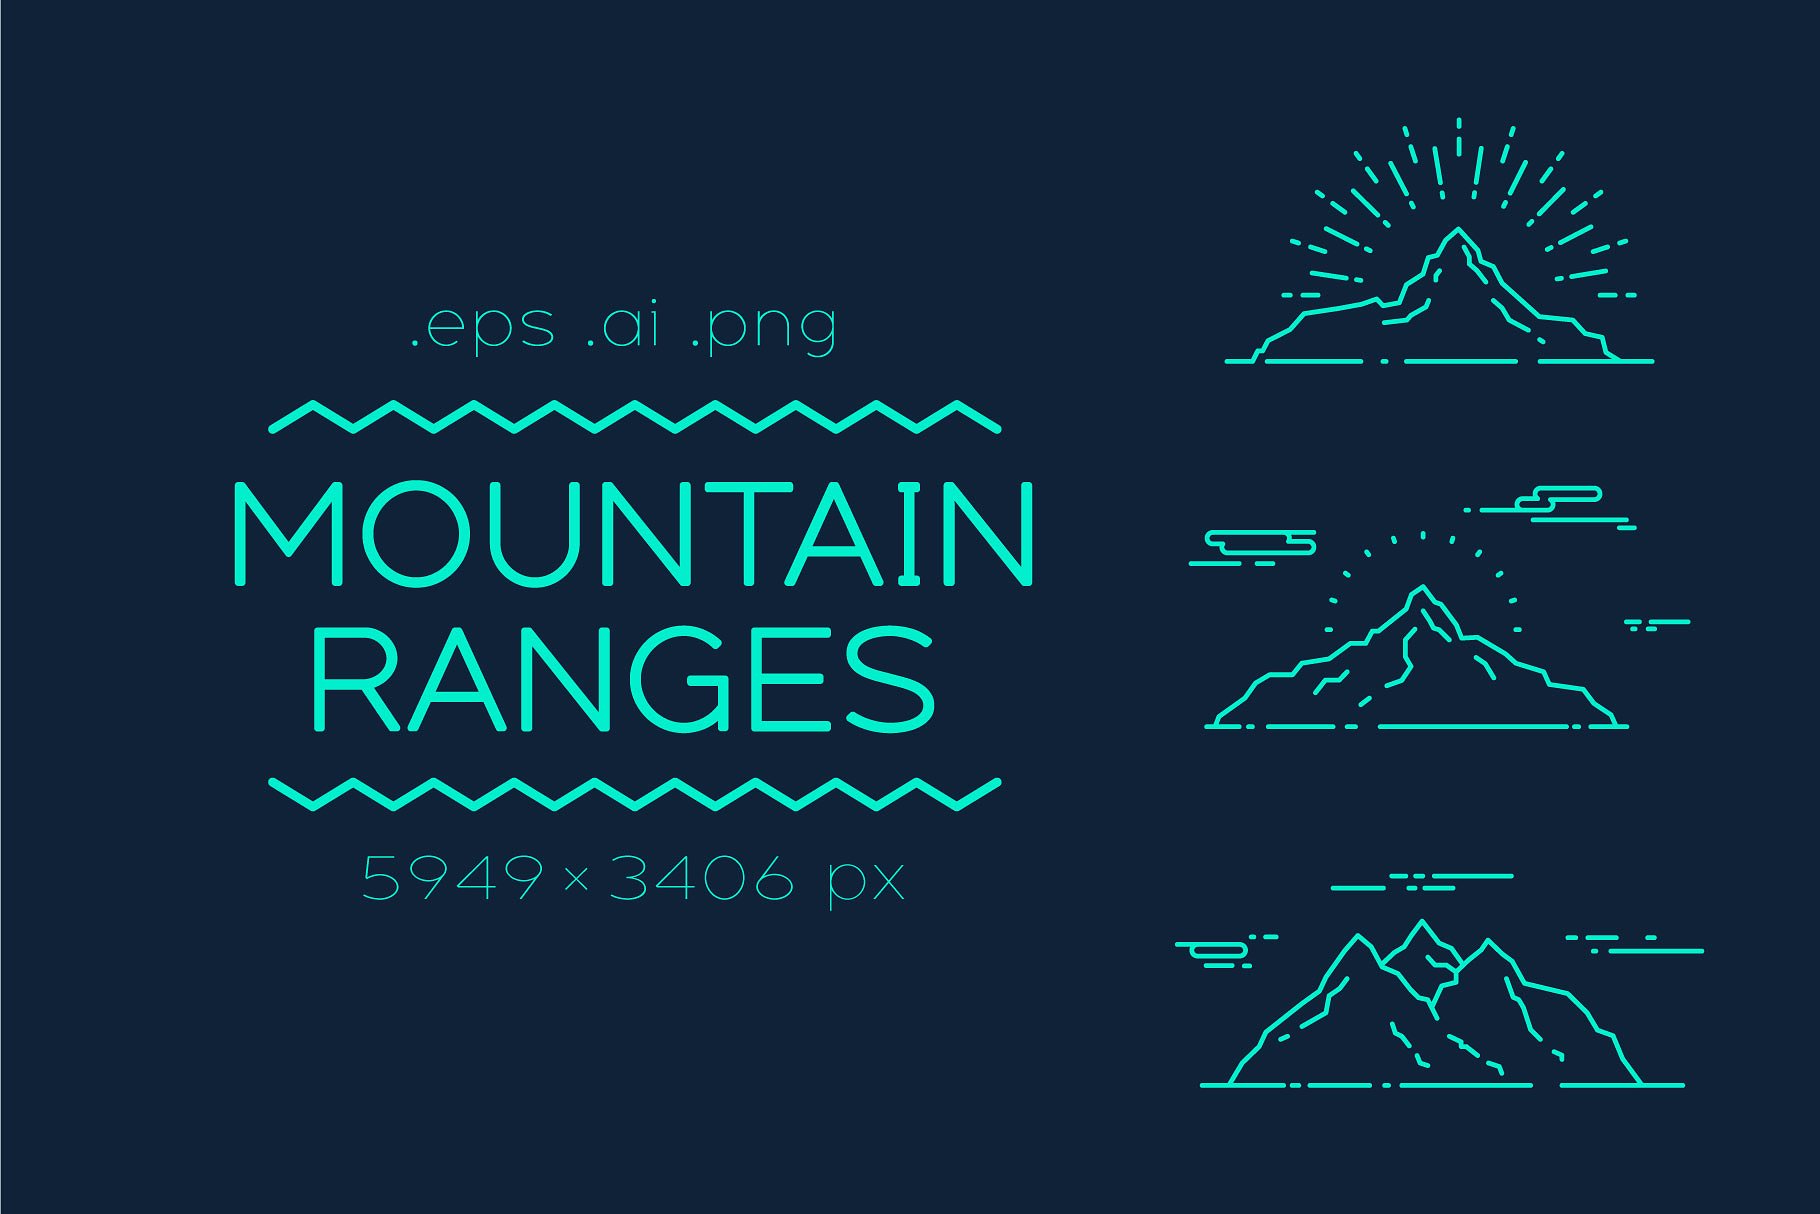 山脉线条图形插画 Set of linear mountains ranges插图